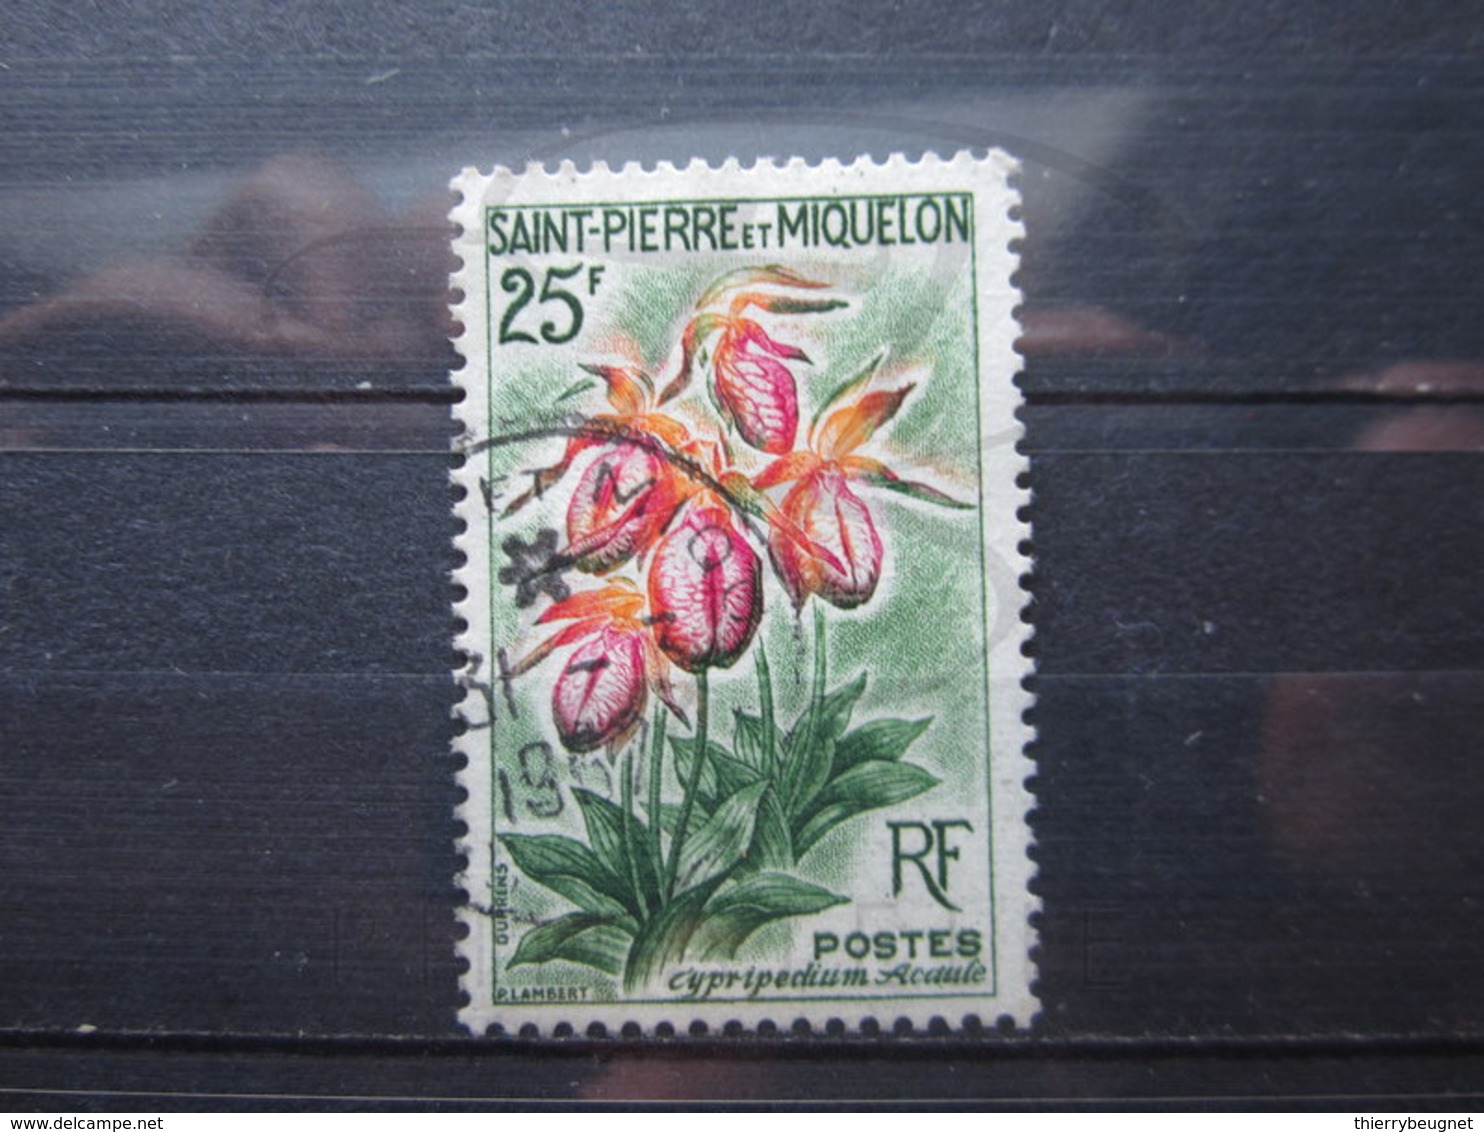 VEND BEAU TIMBRE DE S.P.M. N° 362 !!! - Used Stamps